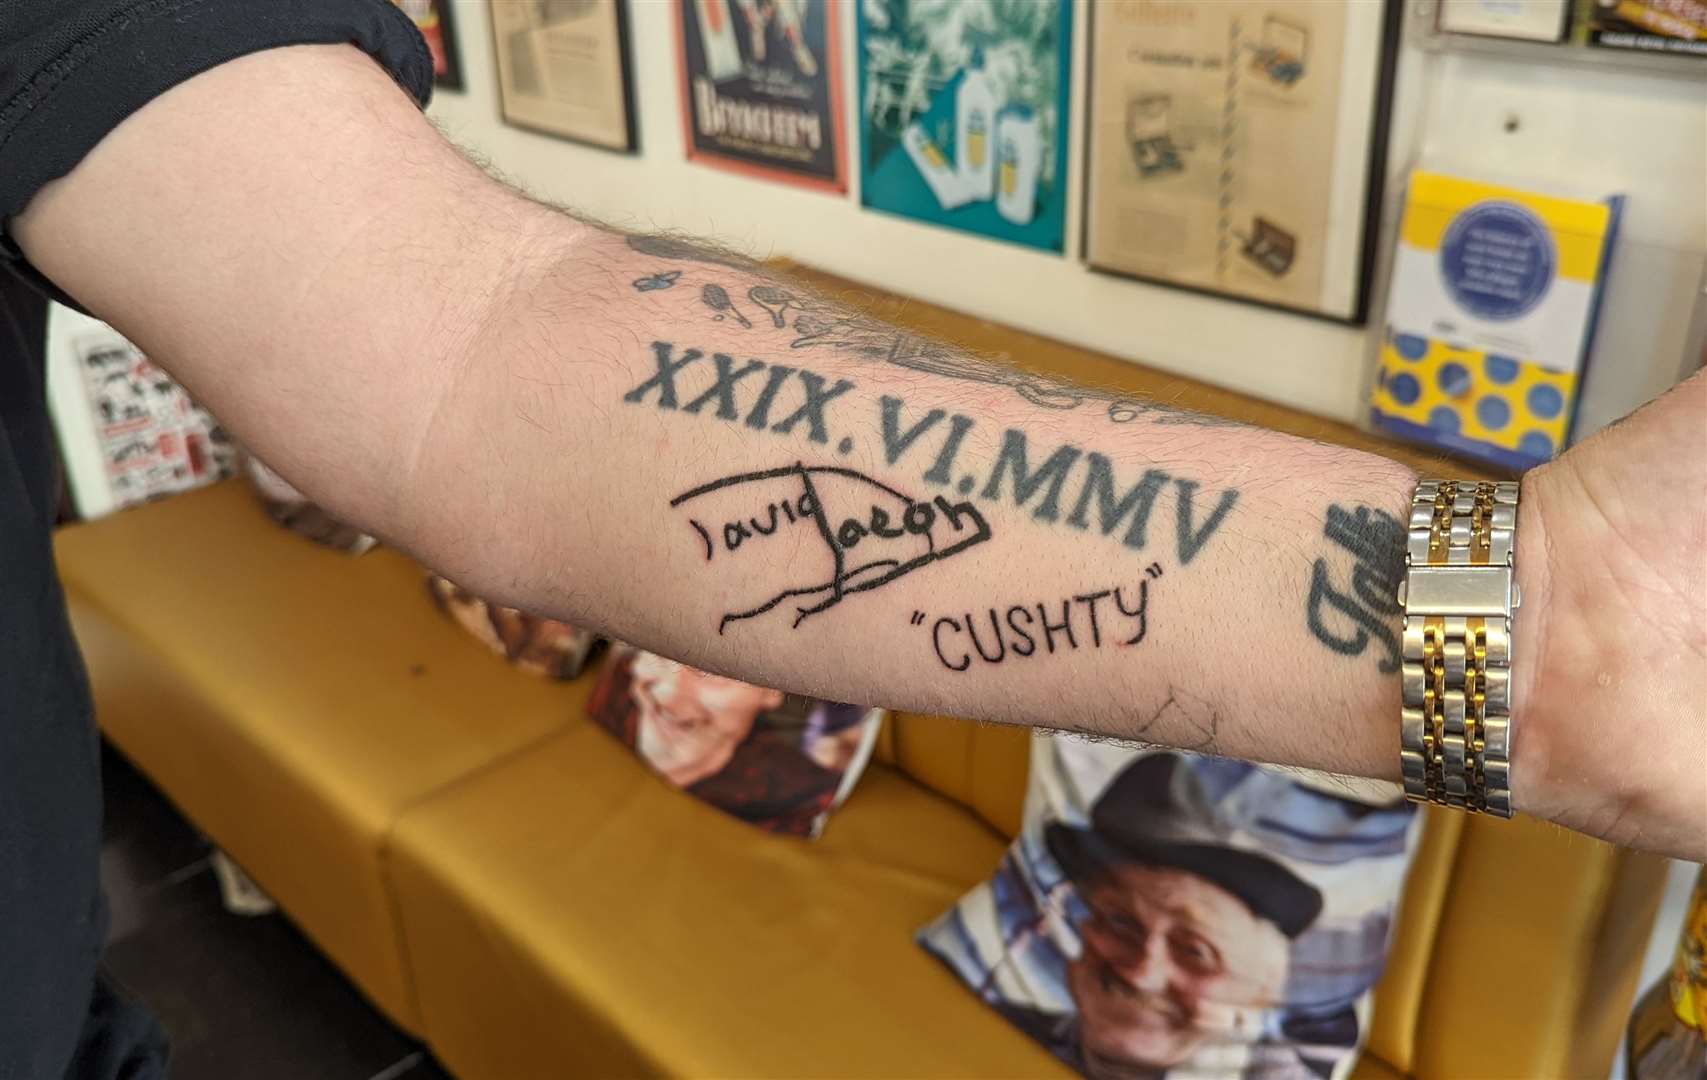 Nathan Scotford has had Sir David Jason's autograph tattooed on his arm